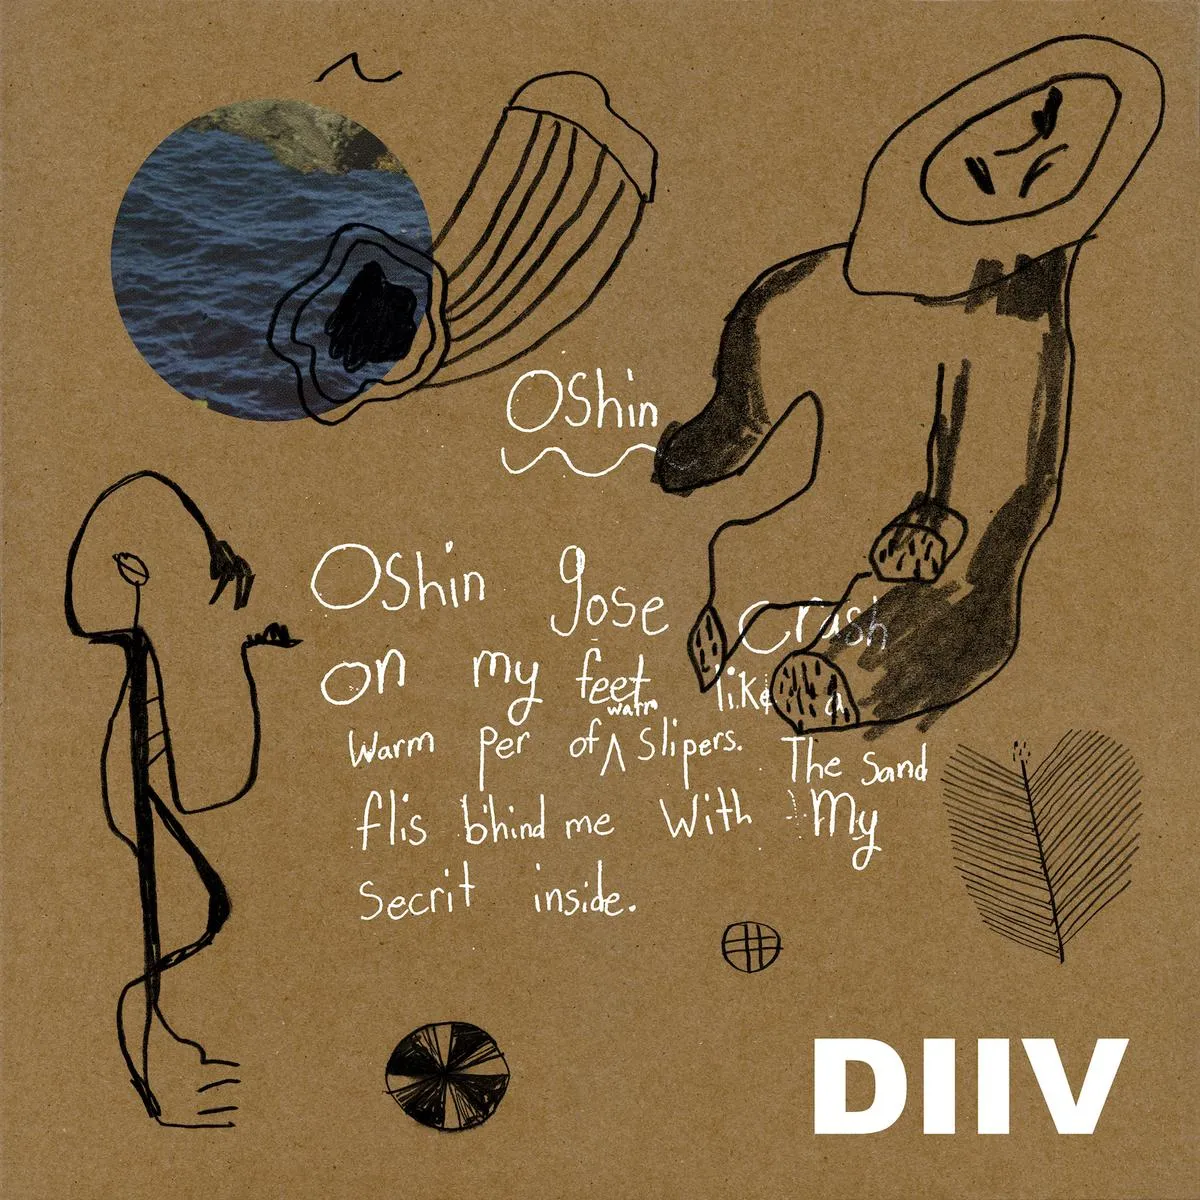 DIIV - Oshin - 10th Anniversary Reissue artwork